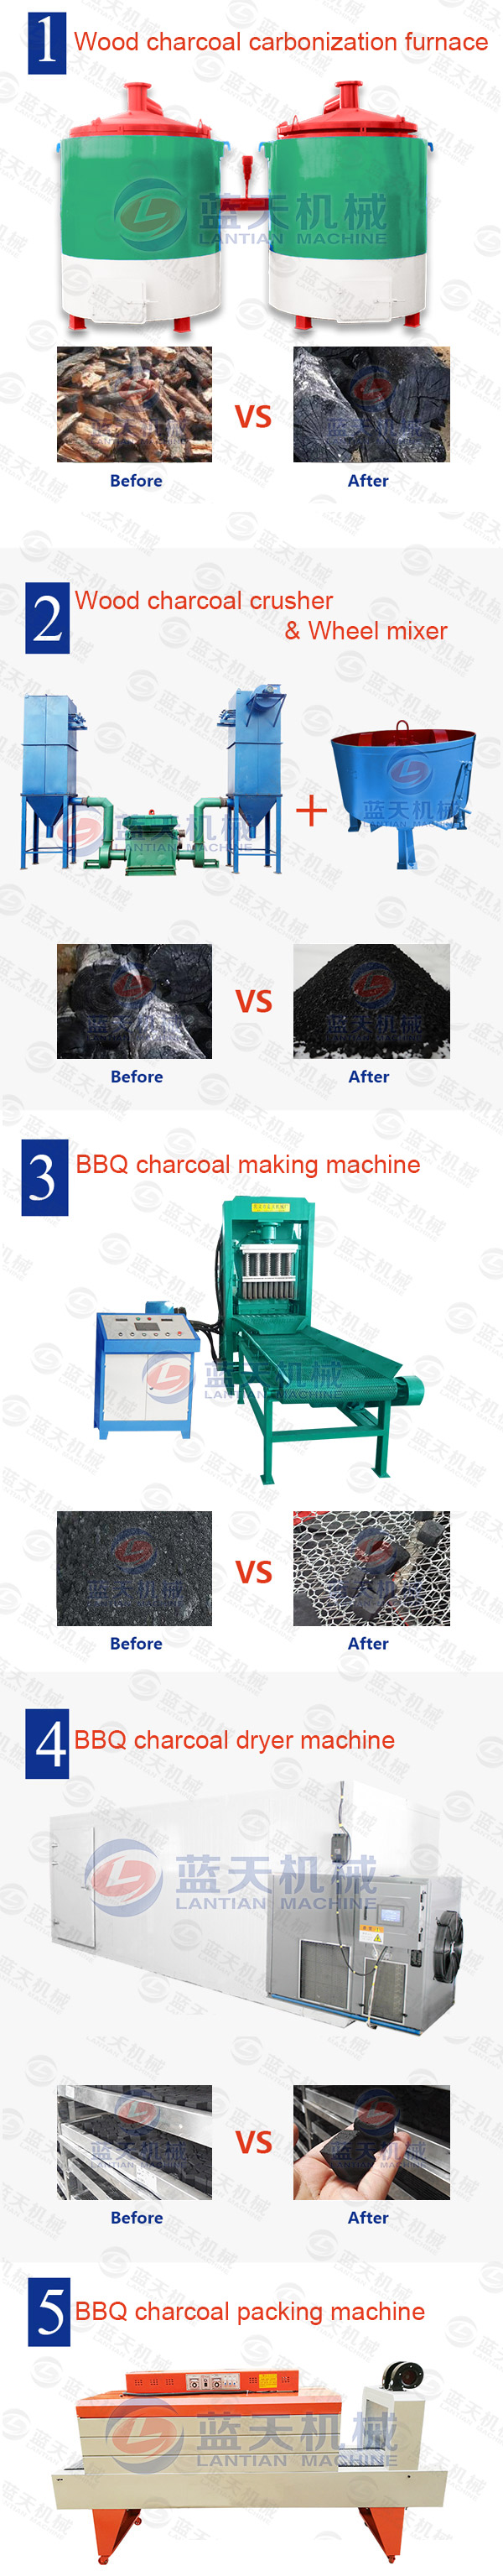 BBQ charcoal press making machine